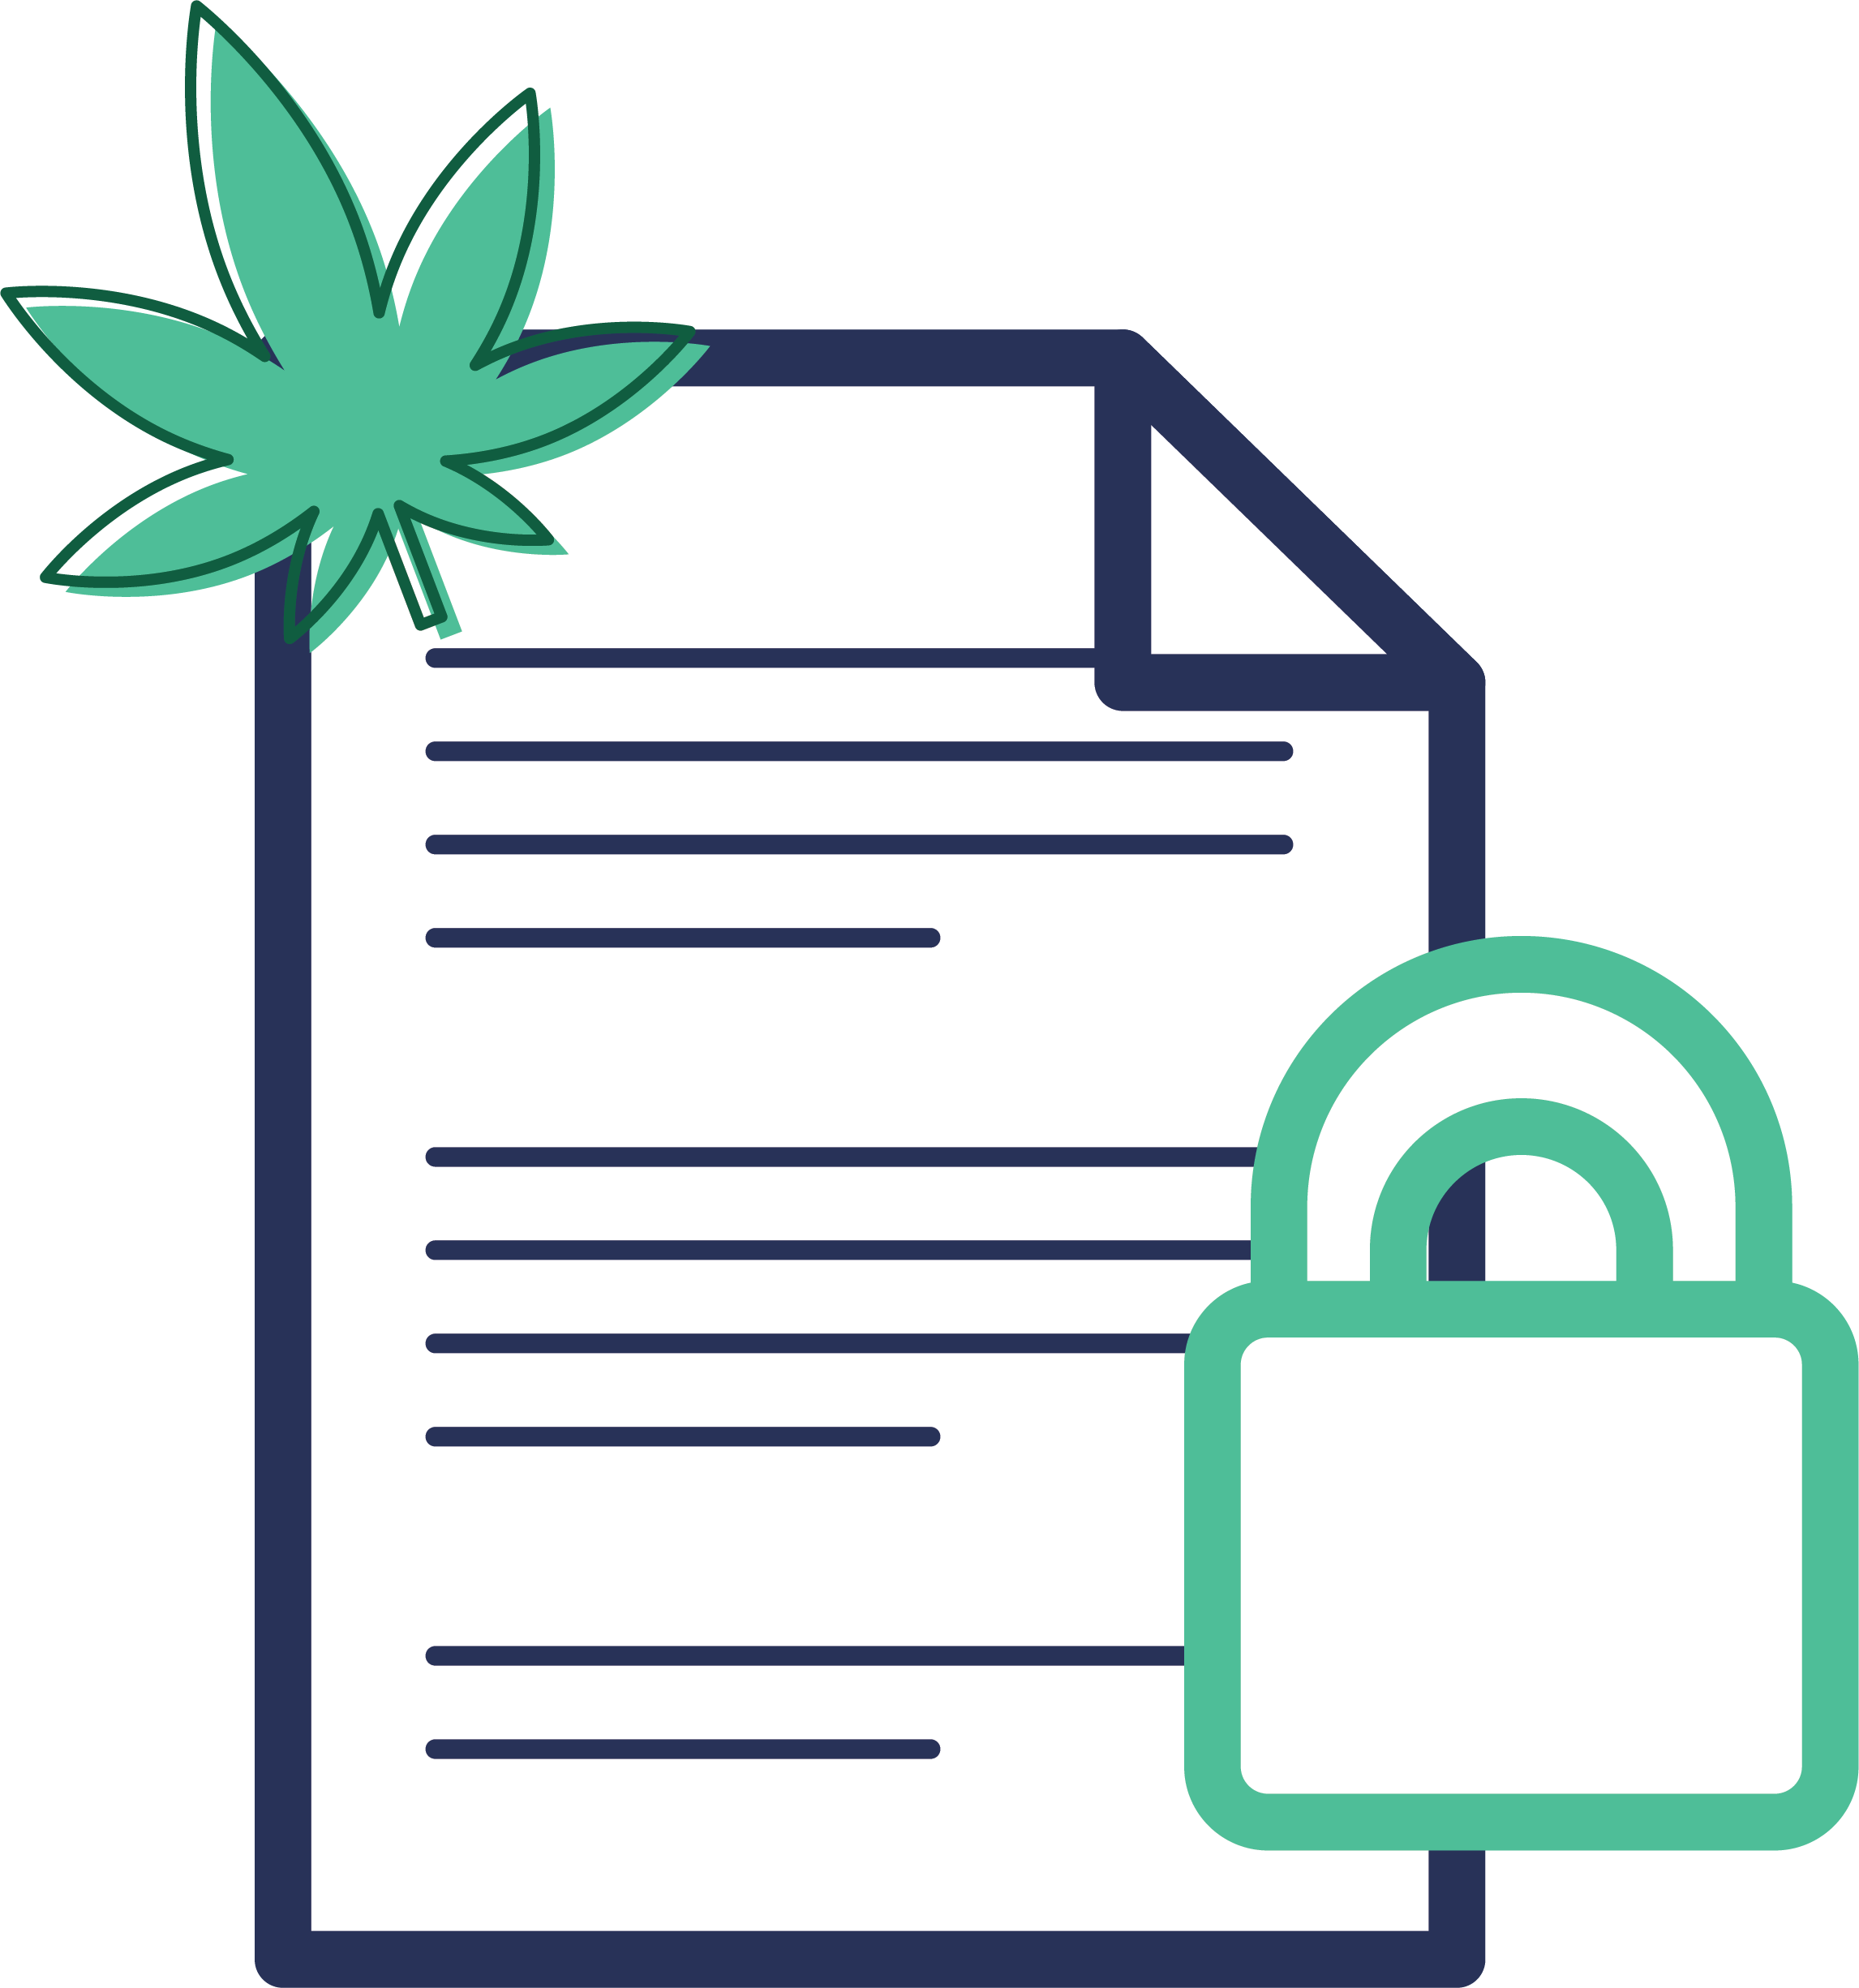 Cannabis Cyber Policy